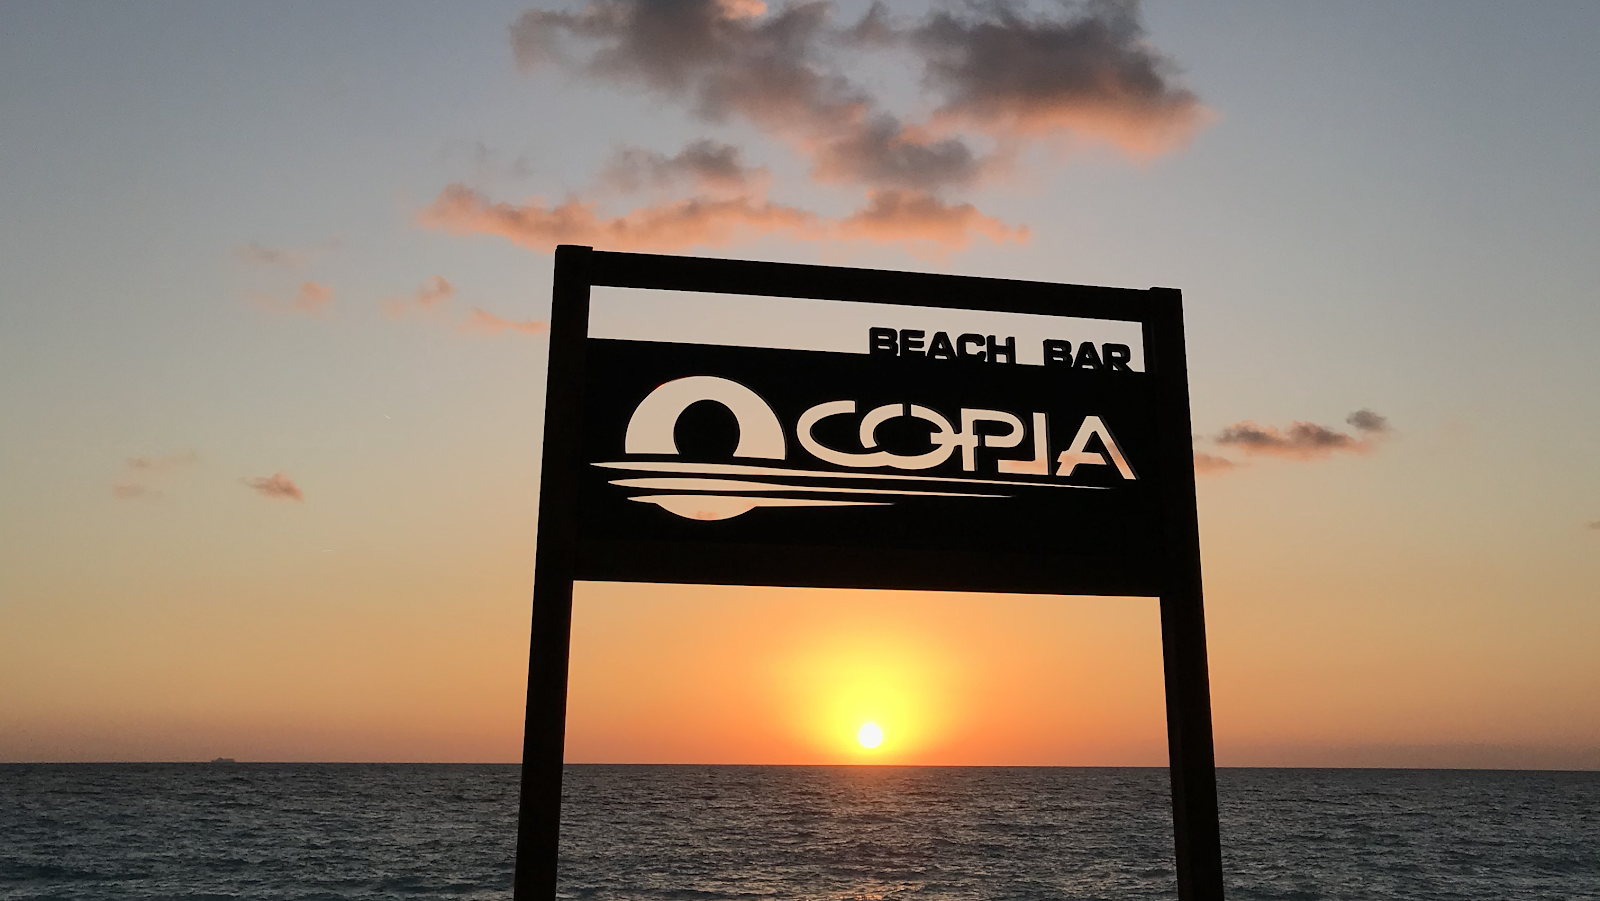 Image - Copla Beach Bar